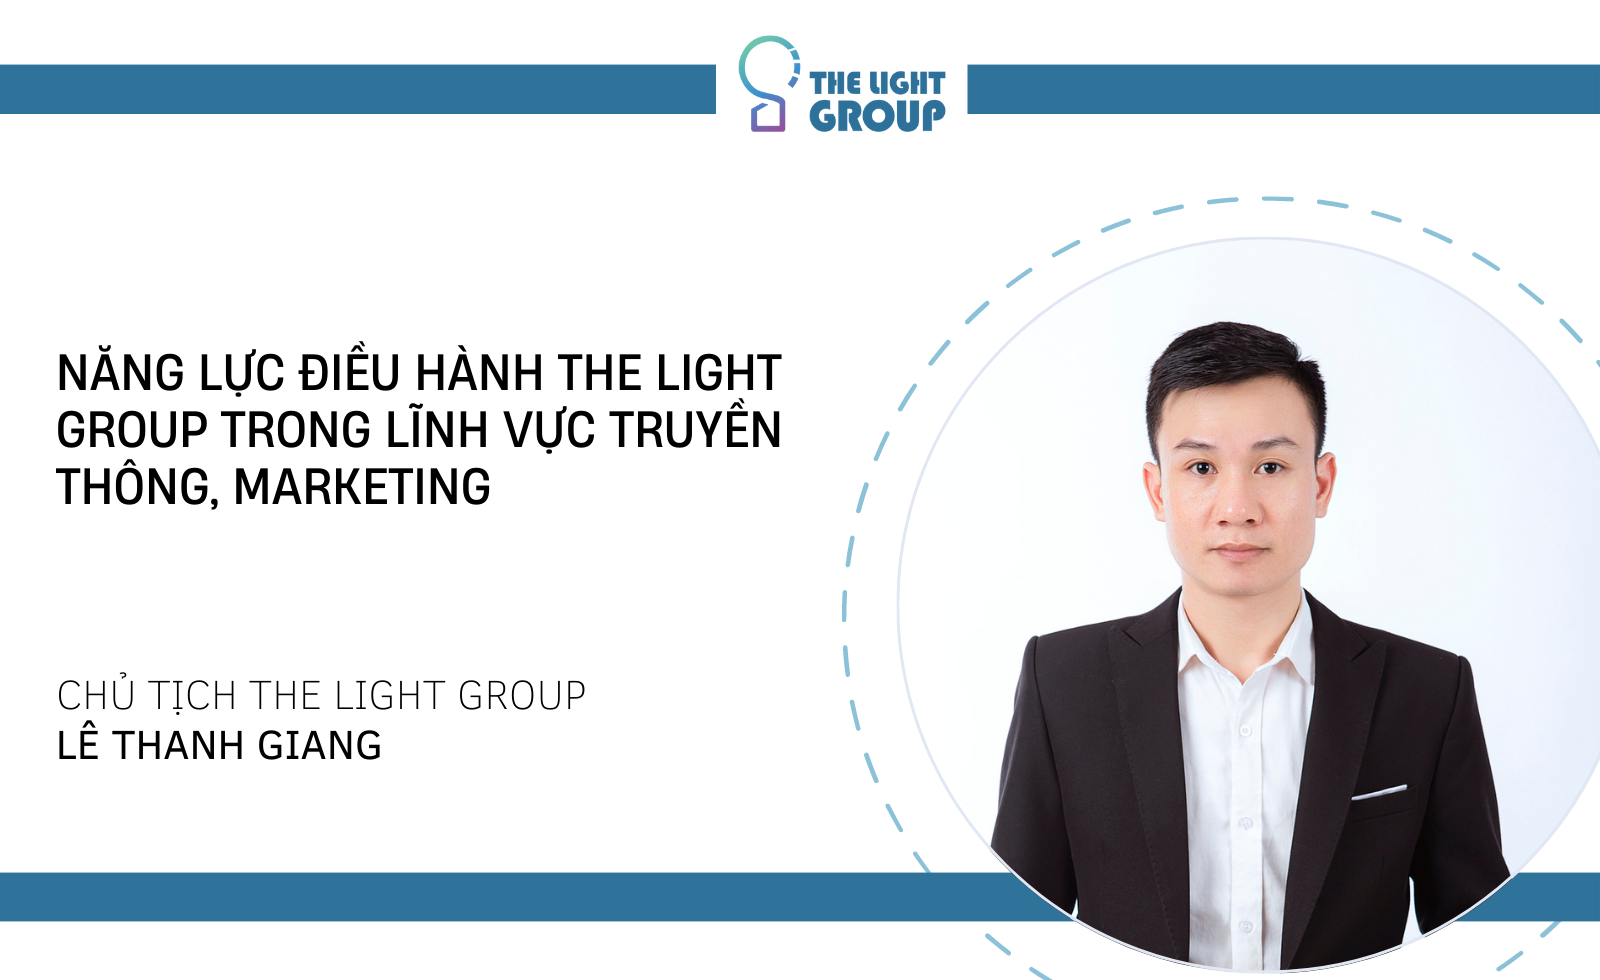 nang-luc-dieu-hanh-the-light-group-trong-linh-vuc-truyen-thong-marketing-1692850025.png